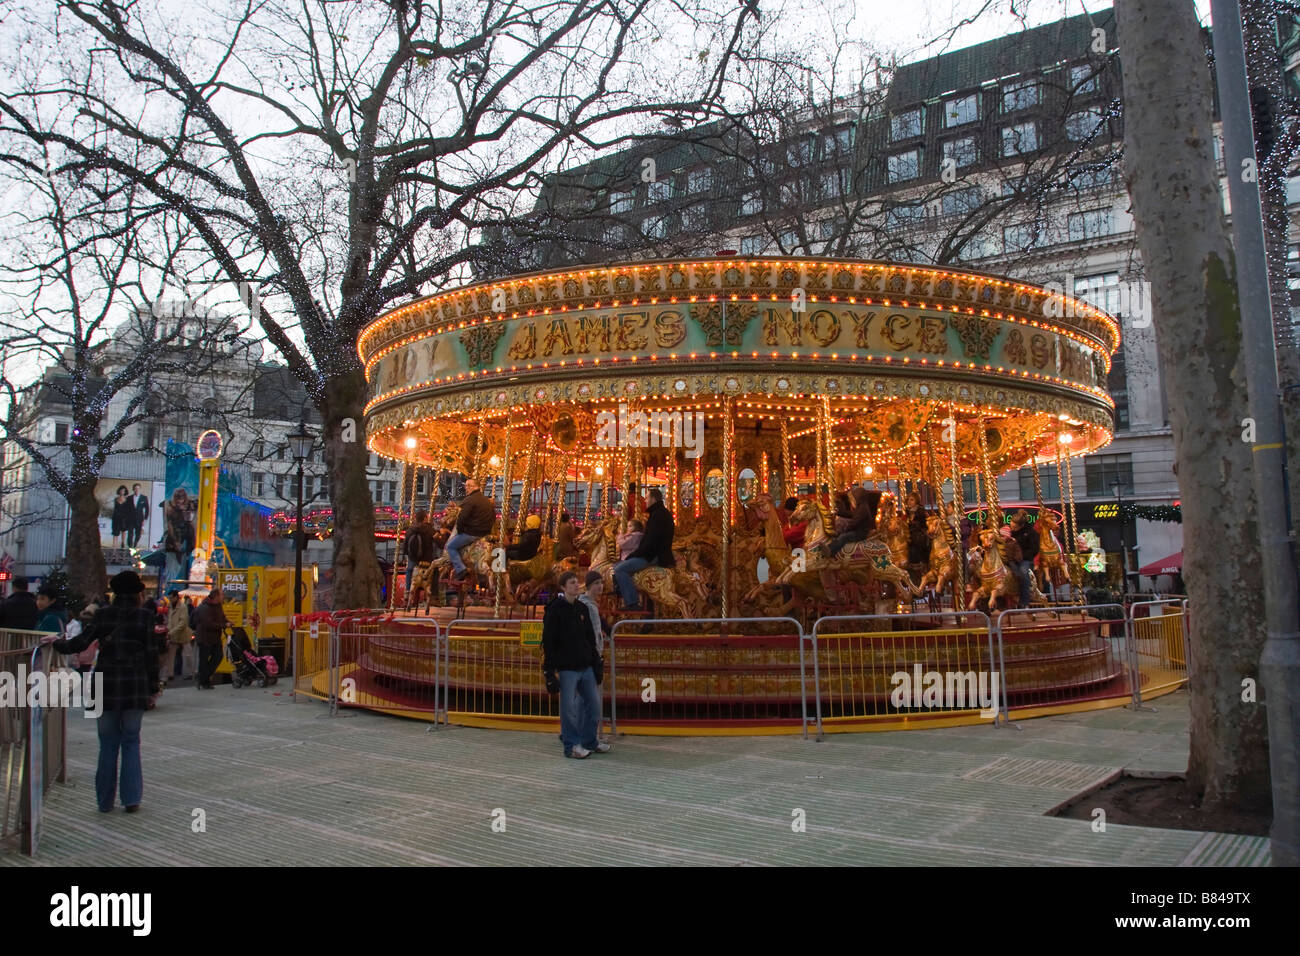 Carrusel de Feria de Navidad en Leicester Square, Londres, Inglaterra Gran Bretaña GB UK Foto de stock